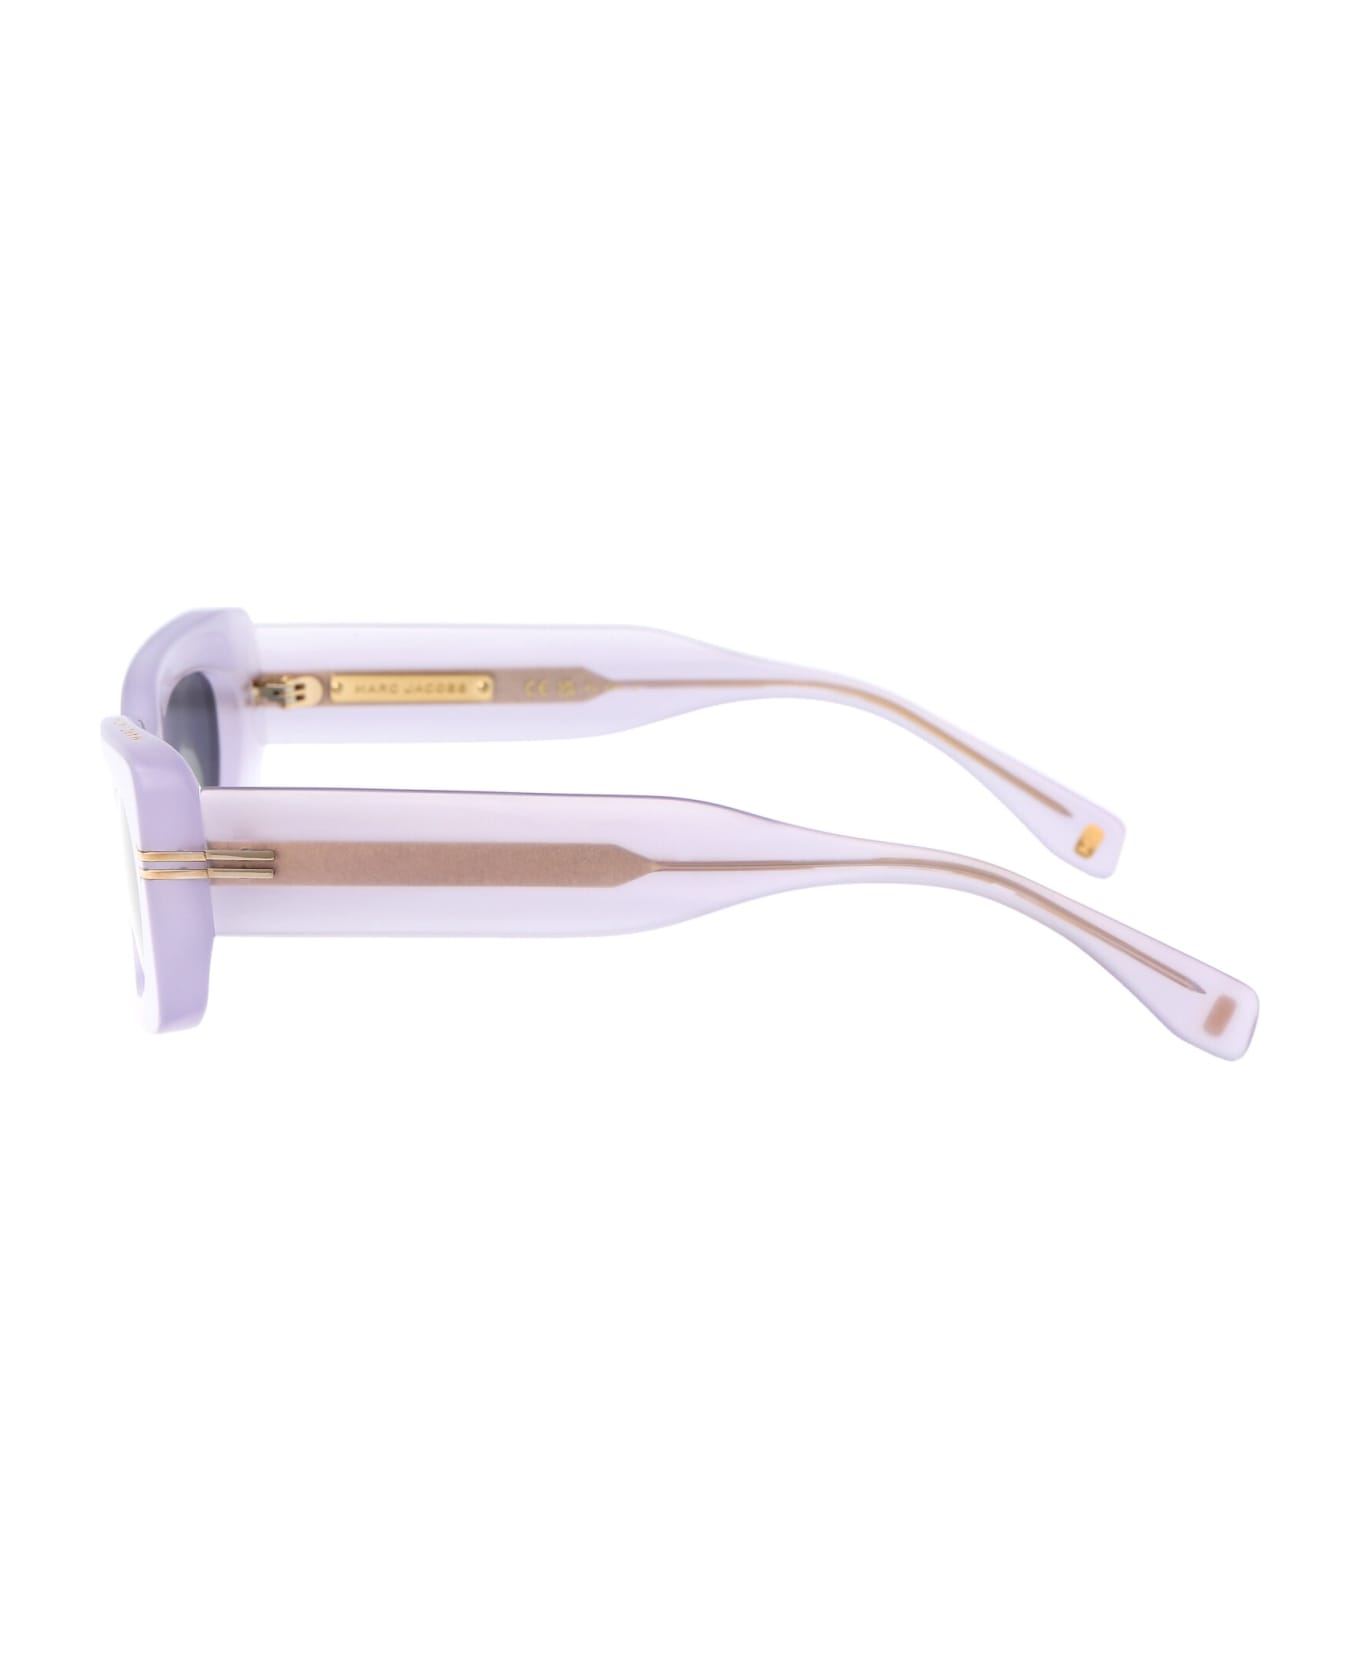 Marc Jacobs Eyewear Mj 1075/s Sunglasses - 789IR LILAC